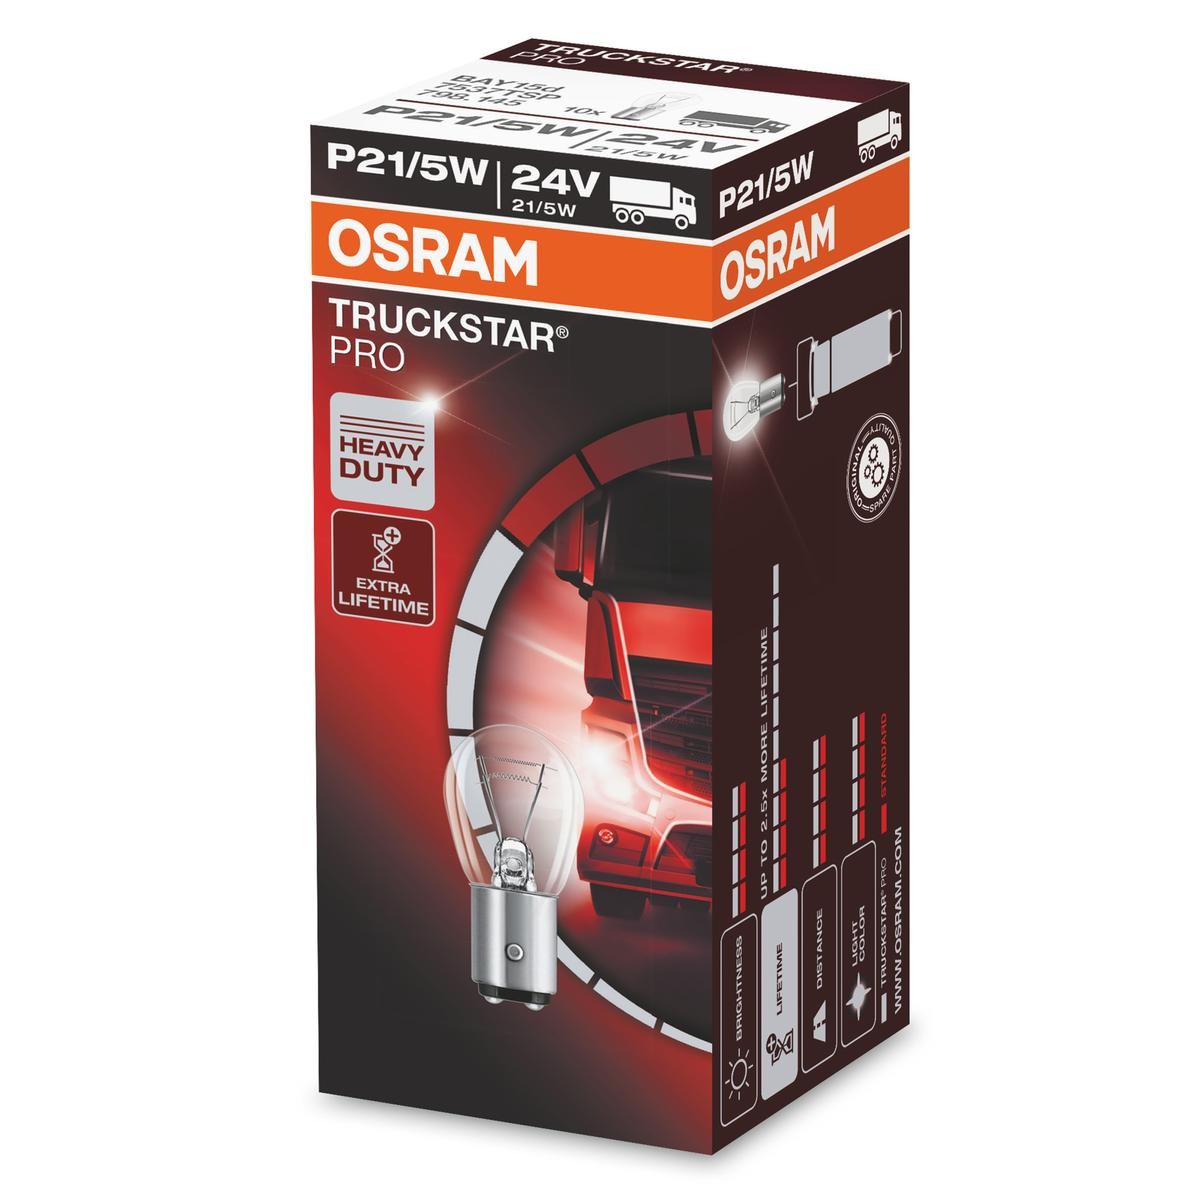 P21/5W OSRAM TRUCKSTAR PRO 24V 21/5W, P21/5W Bulb, indicator 7537TSP buy